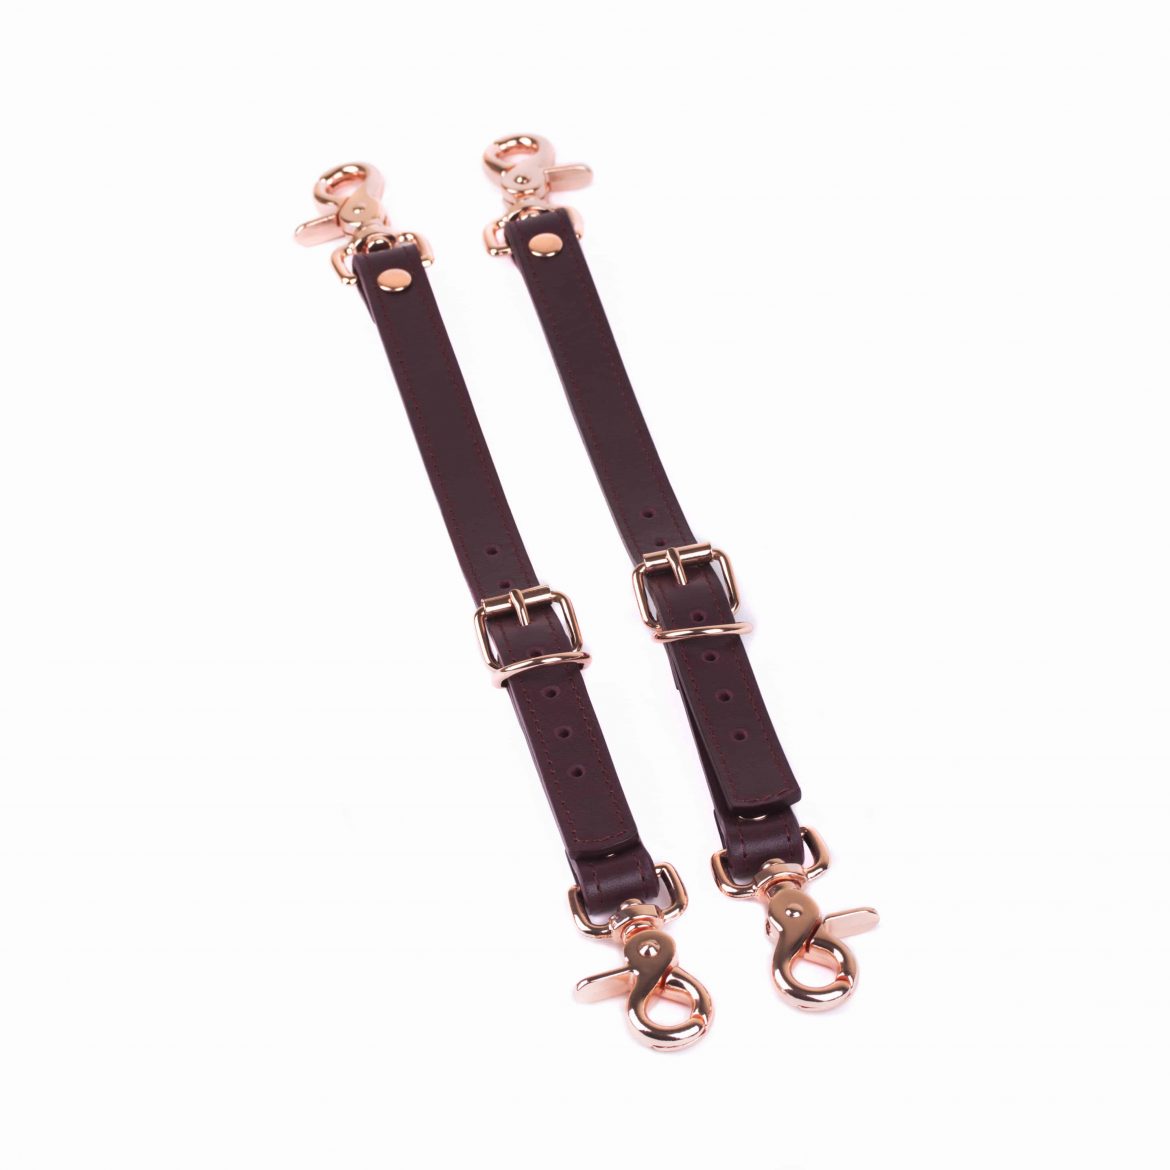 bdsm leather bondage set belt thigh cuffs a pair of garters 23 scaled